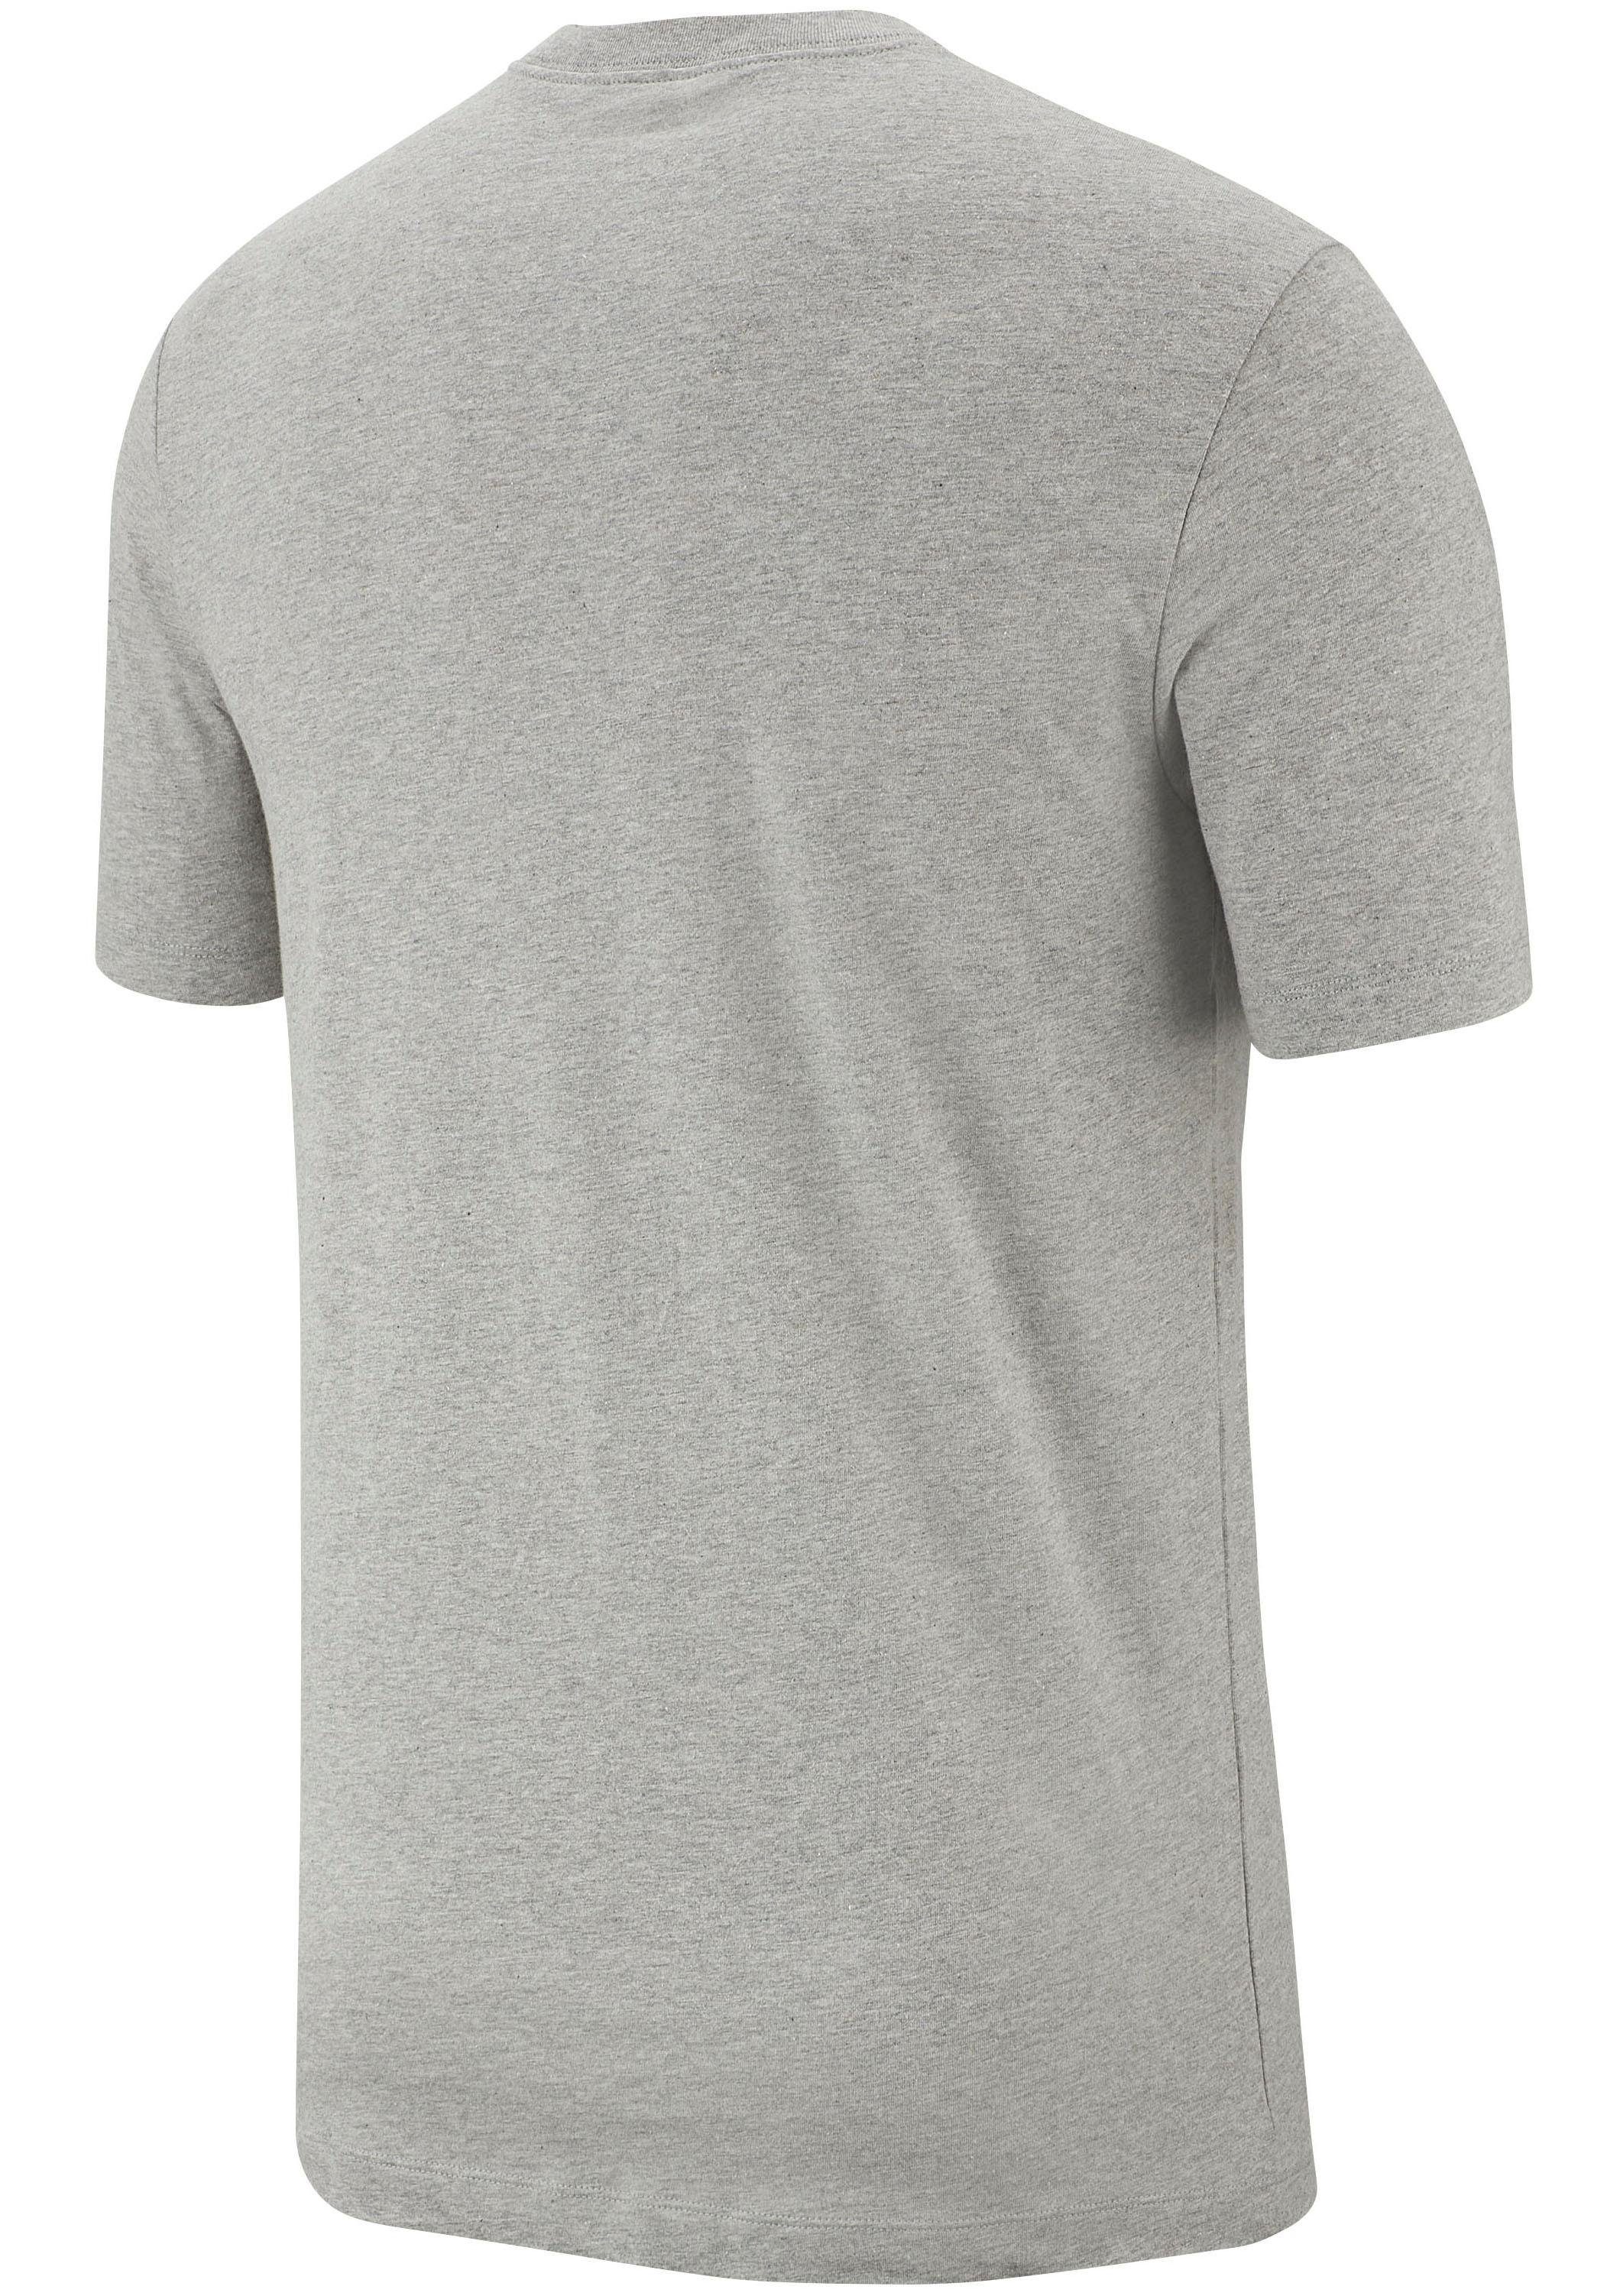 T-Shirt MEN'S CLUB grau Sportswear T-SHIRT Nike